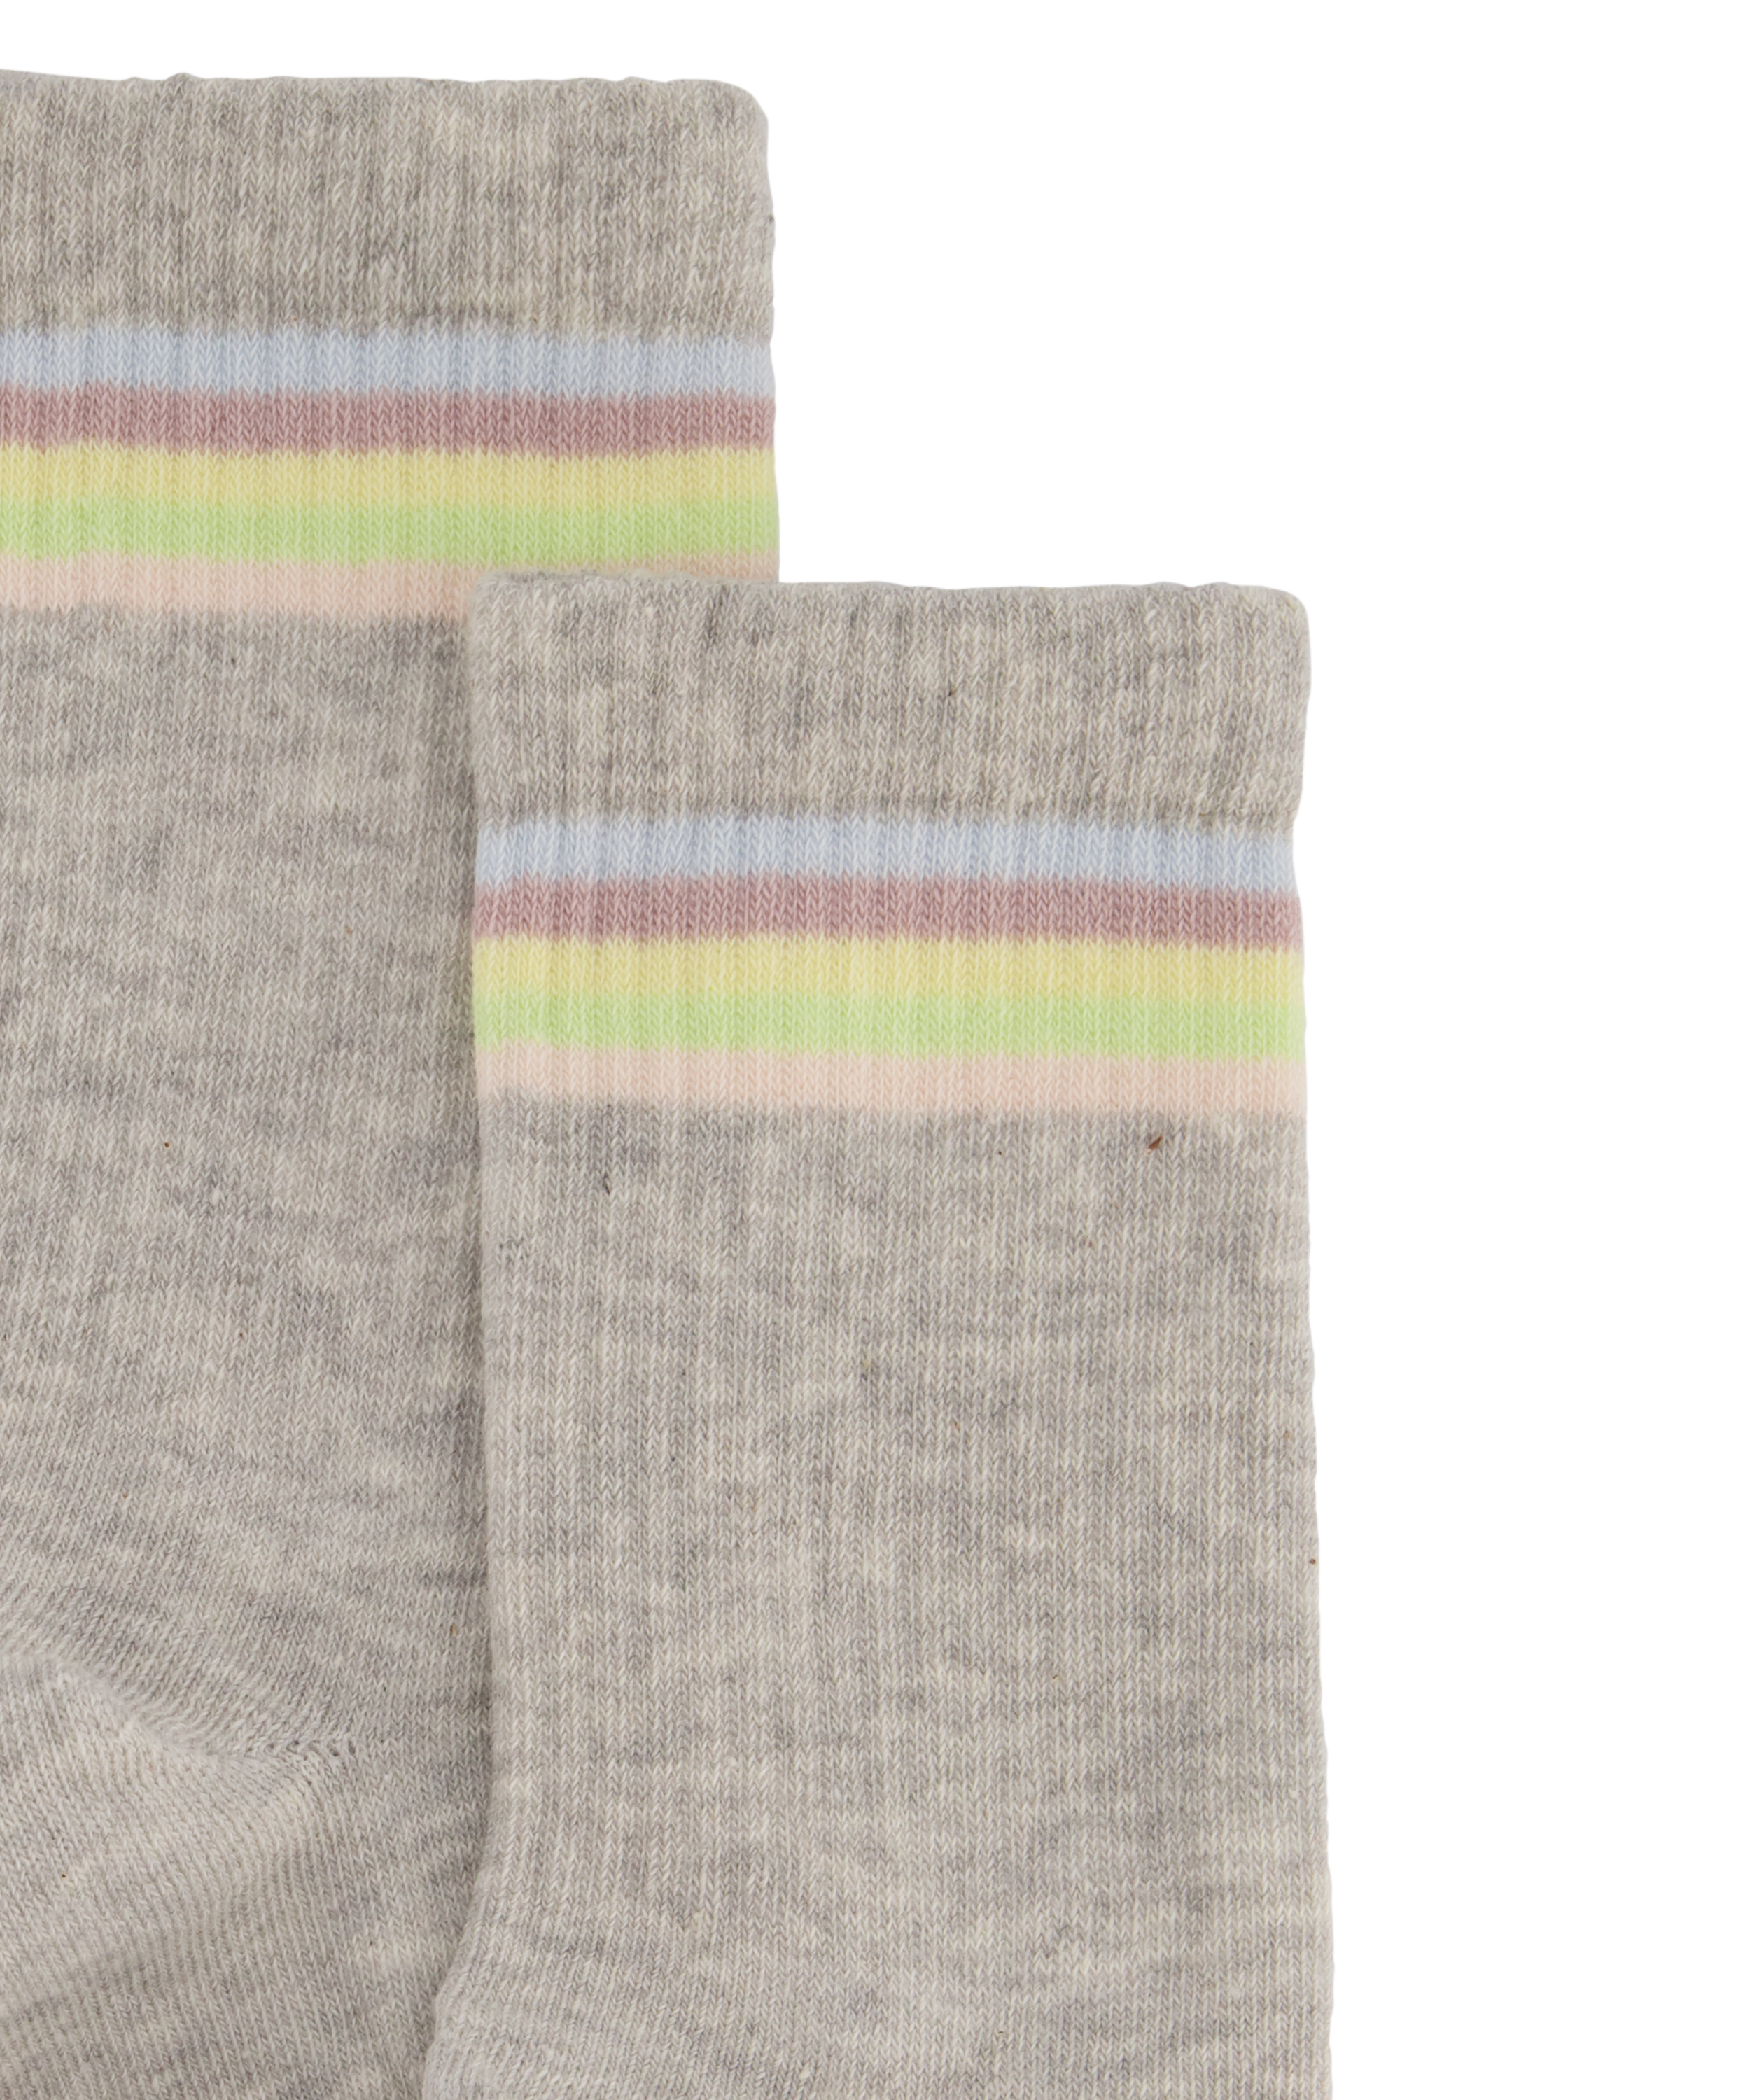 2 pairs of socks, Grey, main